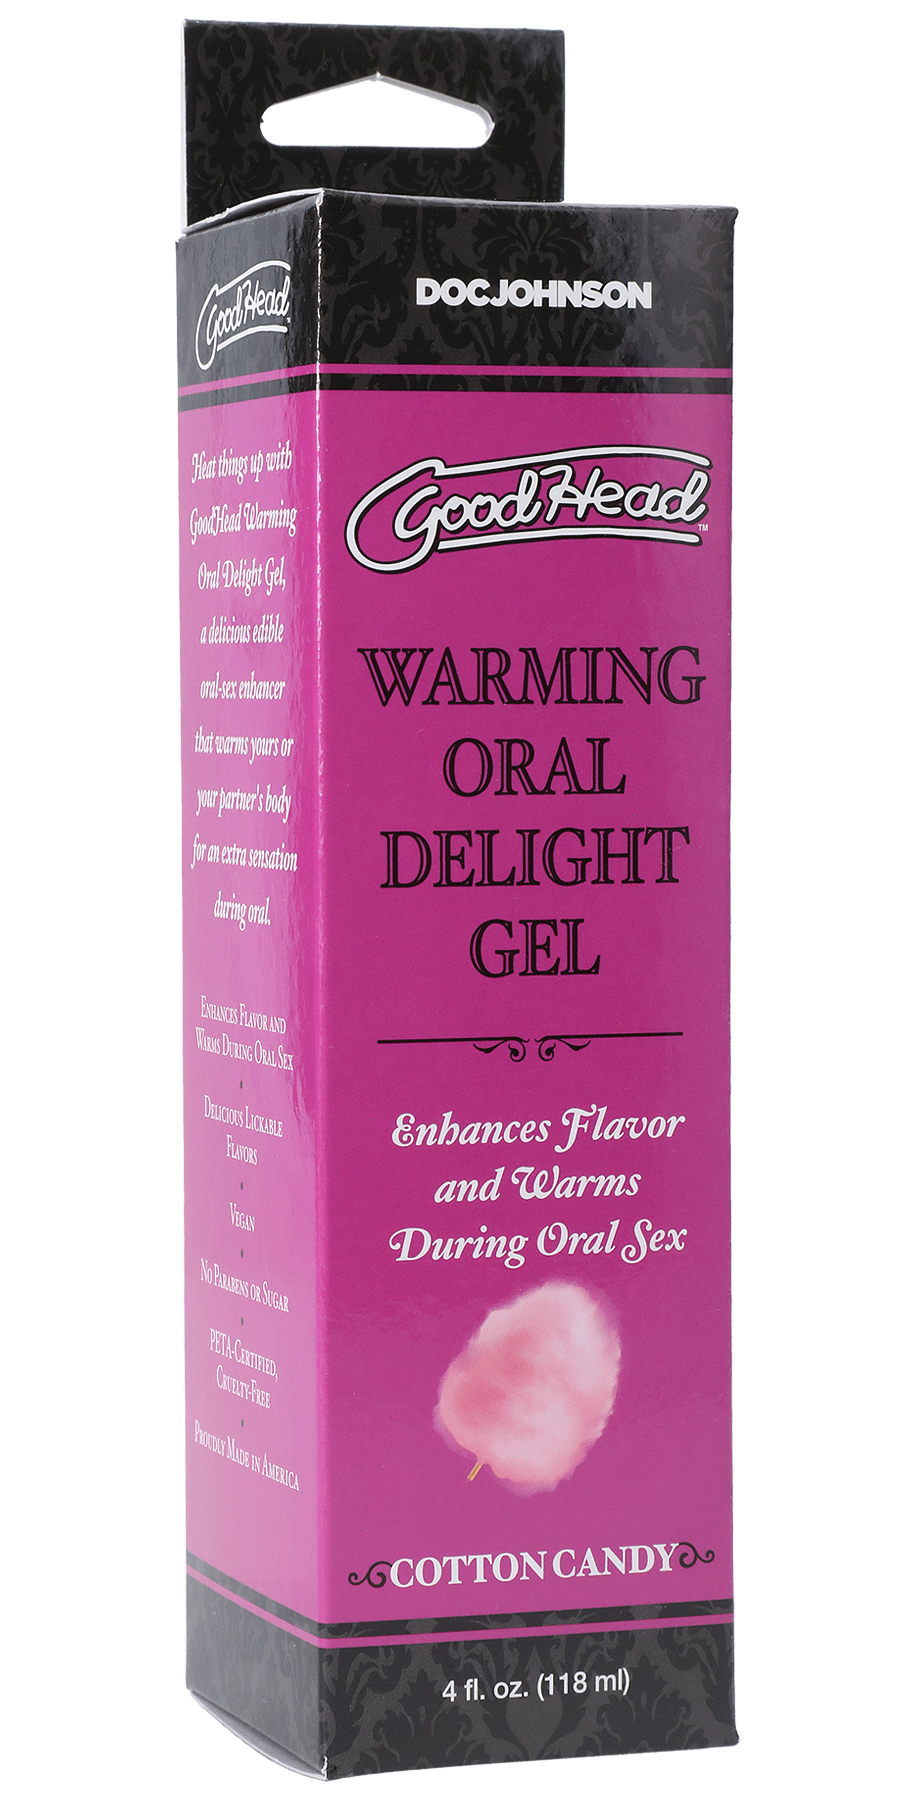 Goodhead Oral Delight Flavored Gel